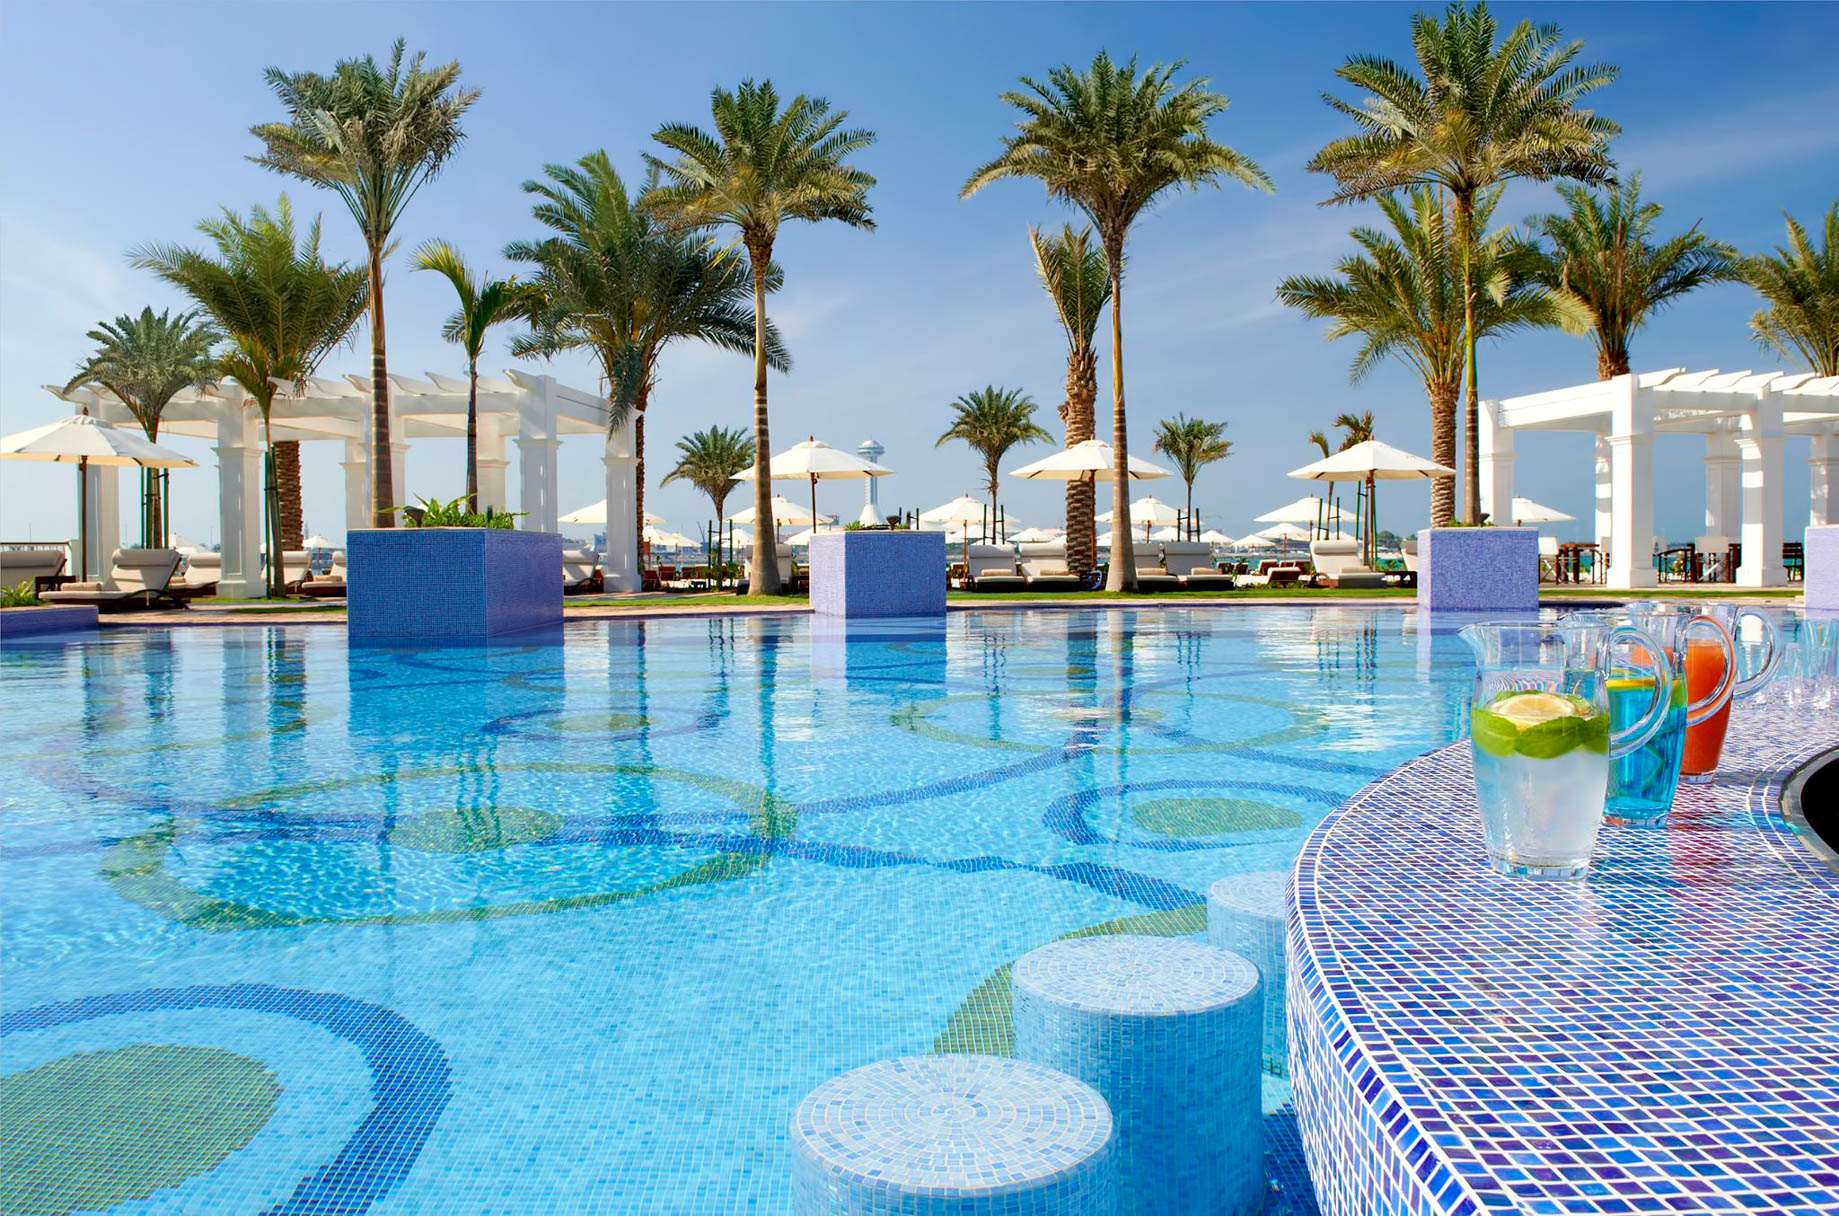 The St. Regis Abu Dhabi Hotel - Abu Dhabi, United Arab Emirates - Swim Up Pool Bar